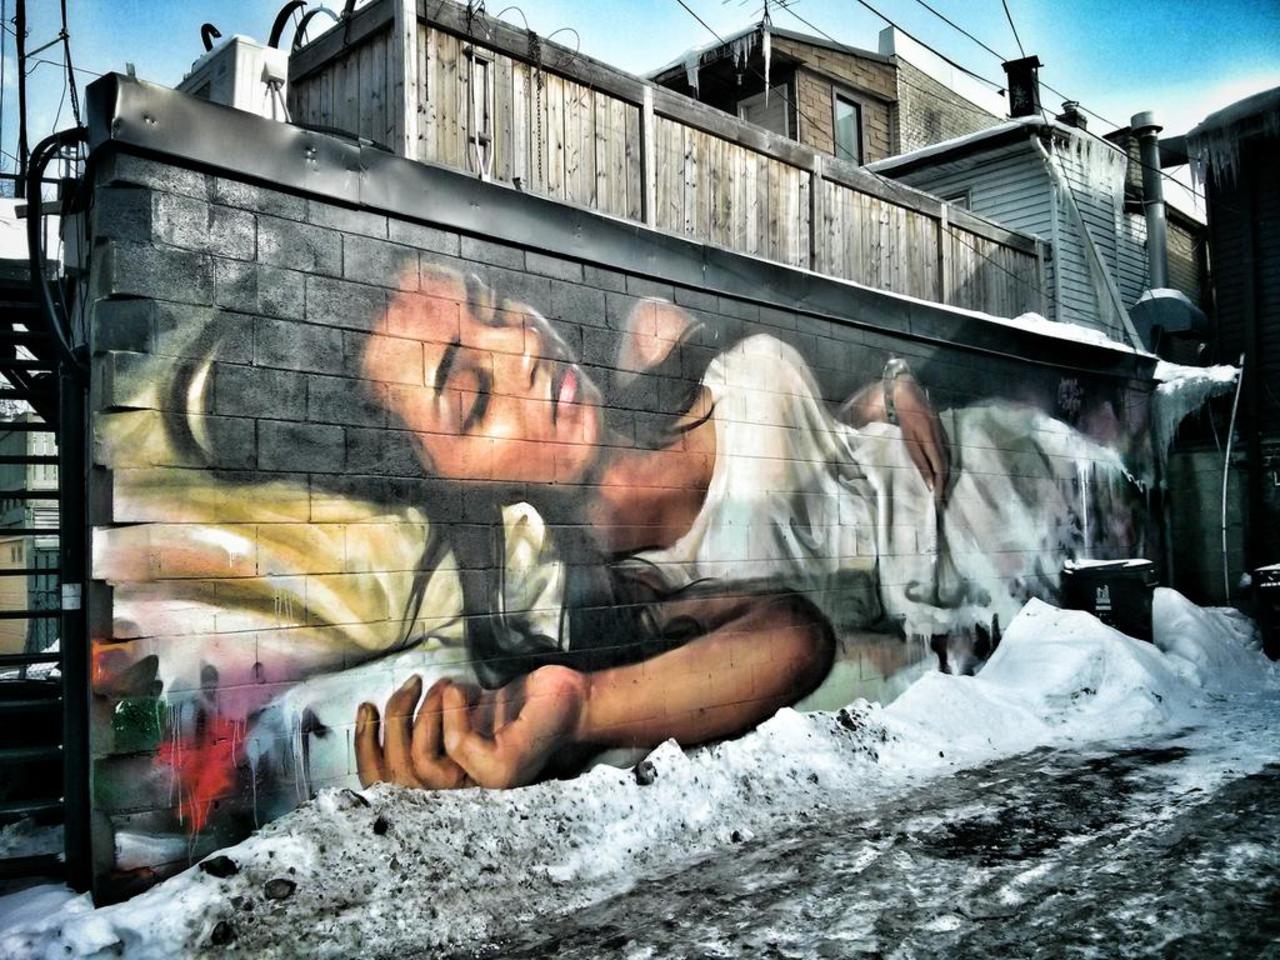 Beautiful sleeper by Jarus, Toronto.
#graffiti #mural #streetart #urbanart http://t.co/LImZk9FxTG